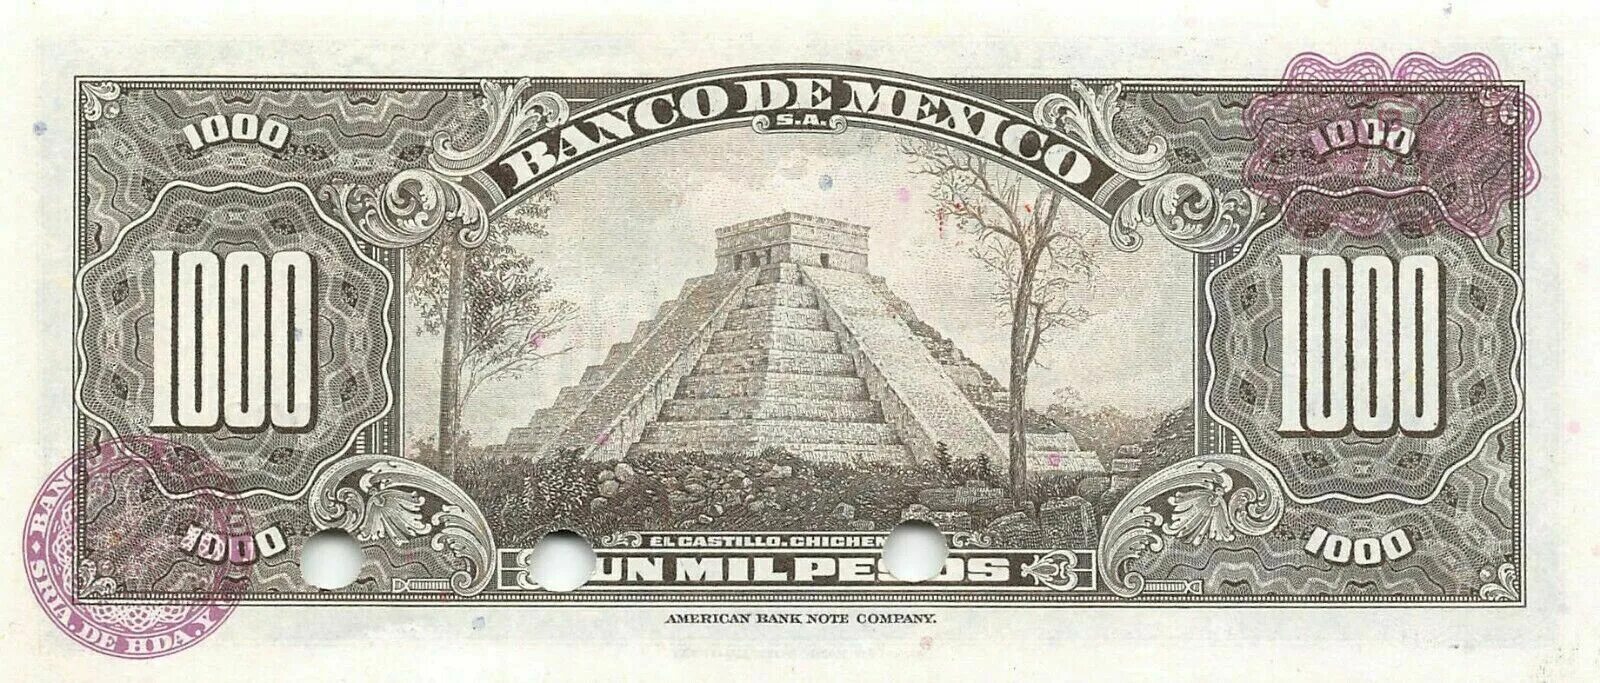 T me bank notes. Купюра Мексики 1000. 1000 Песо Мексика. Мексиканское песо банкноты 1000. Банкноты Мексики 19 века.